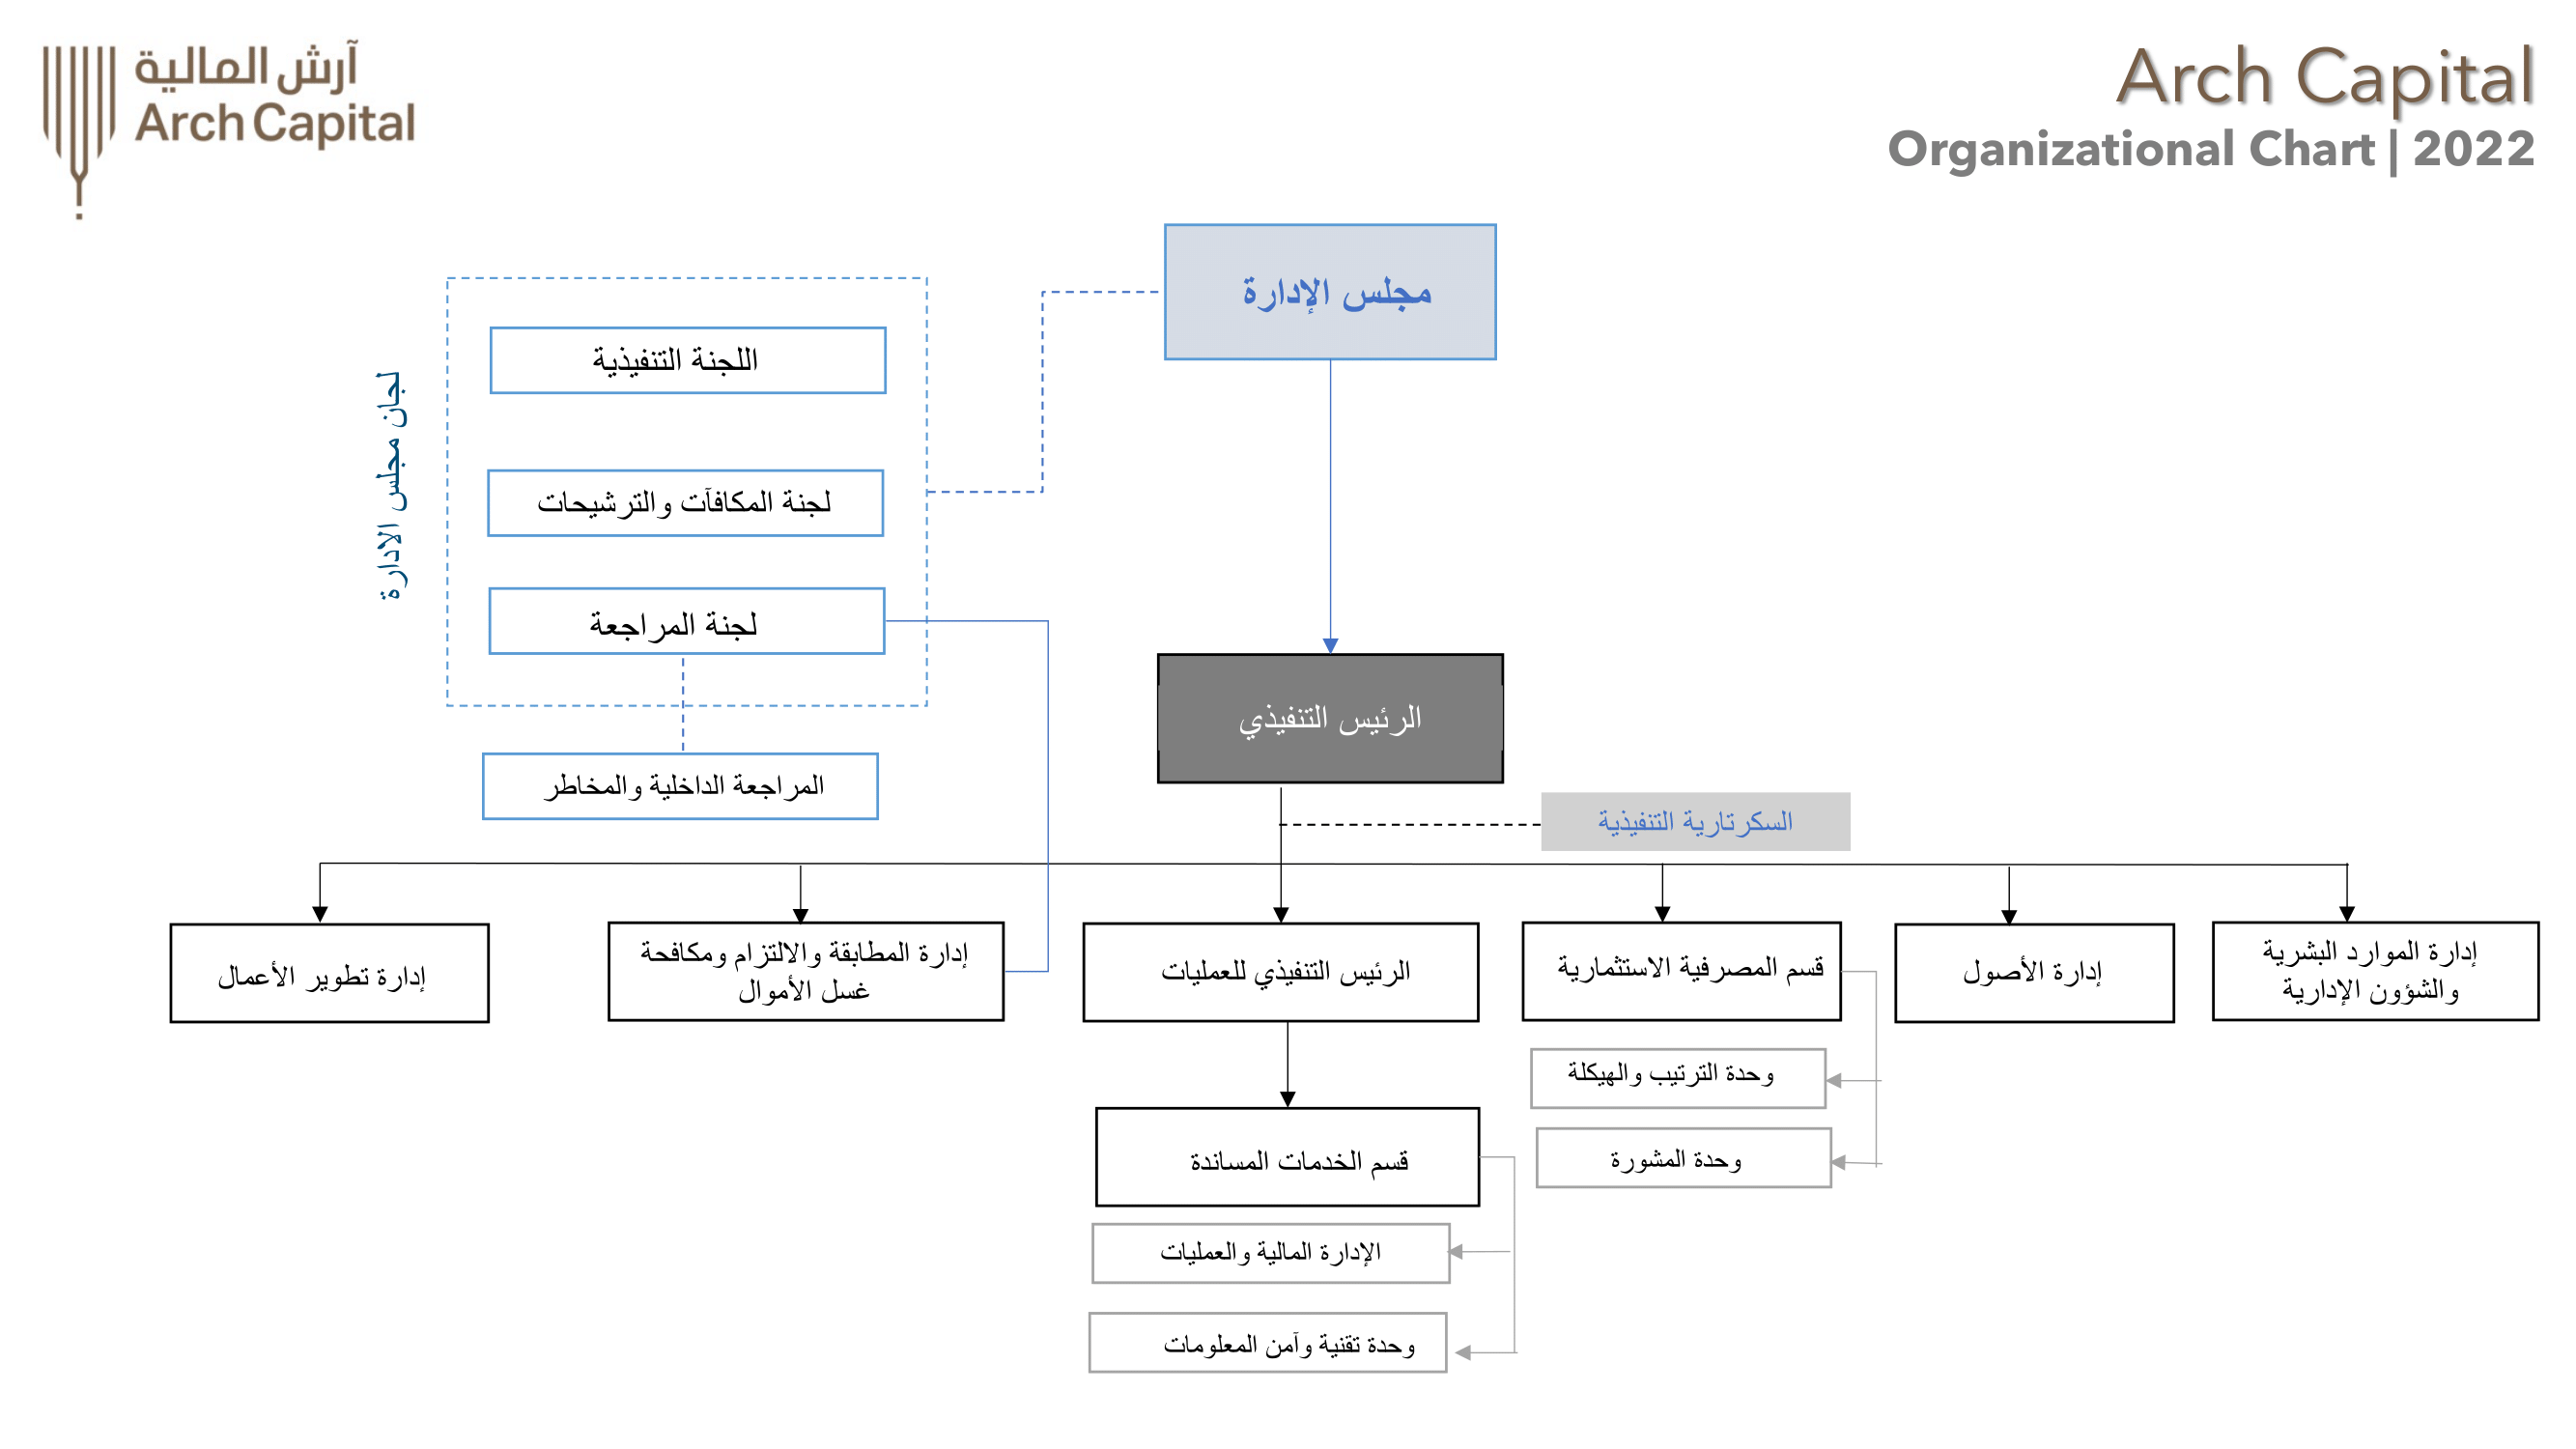 Organizational Chart _FEB 2022-1